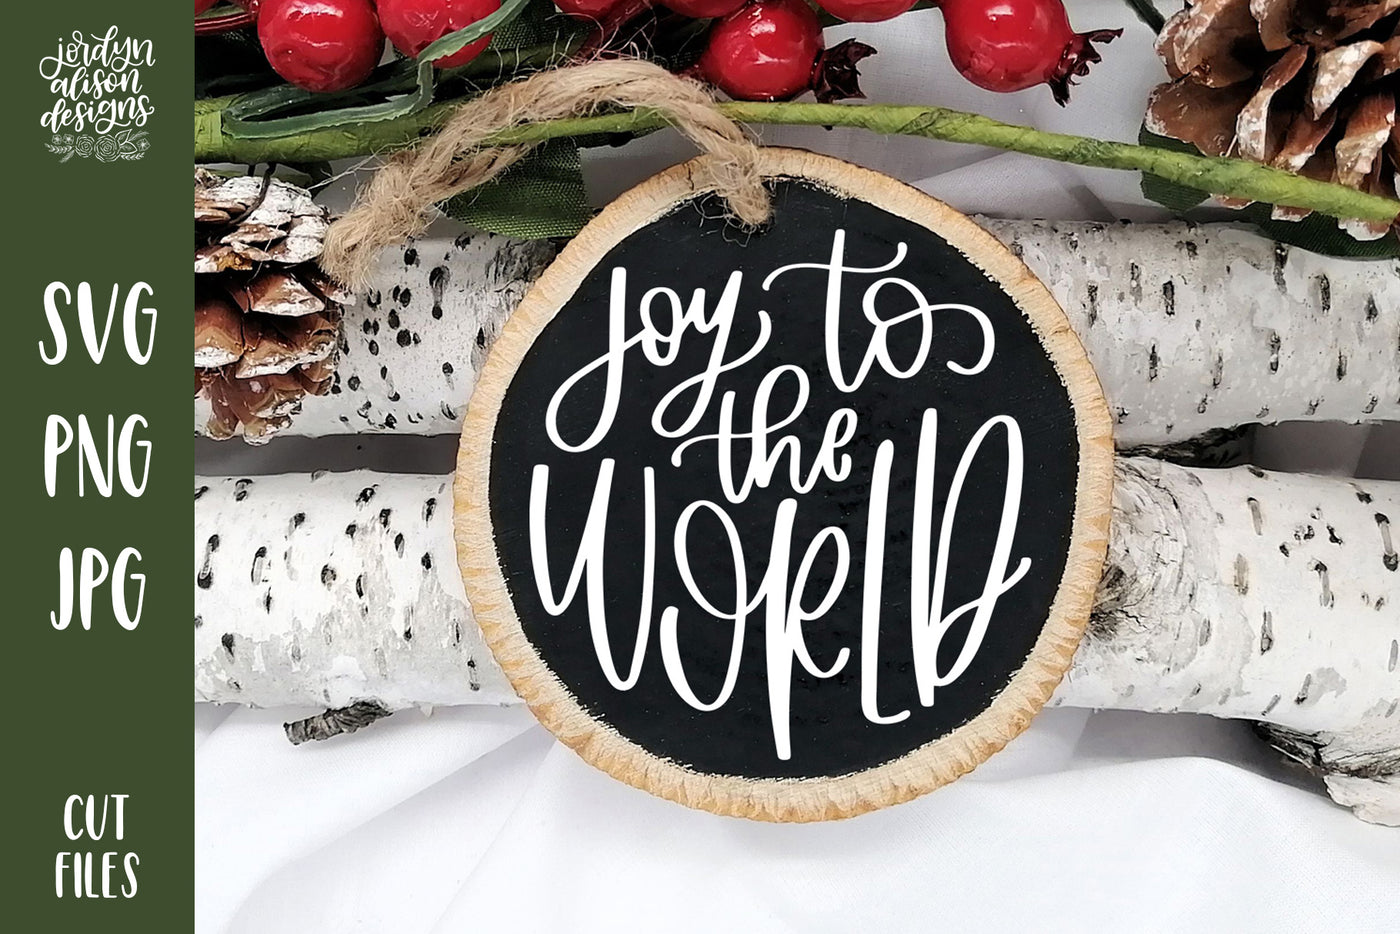 Handwritten text "Joy to the World" on Round Christmas Ornament. 